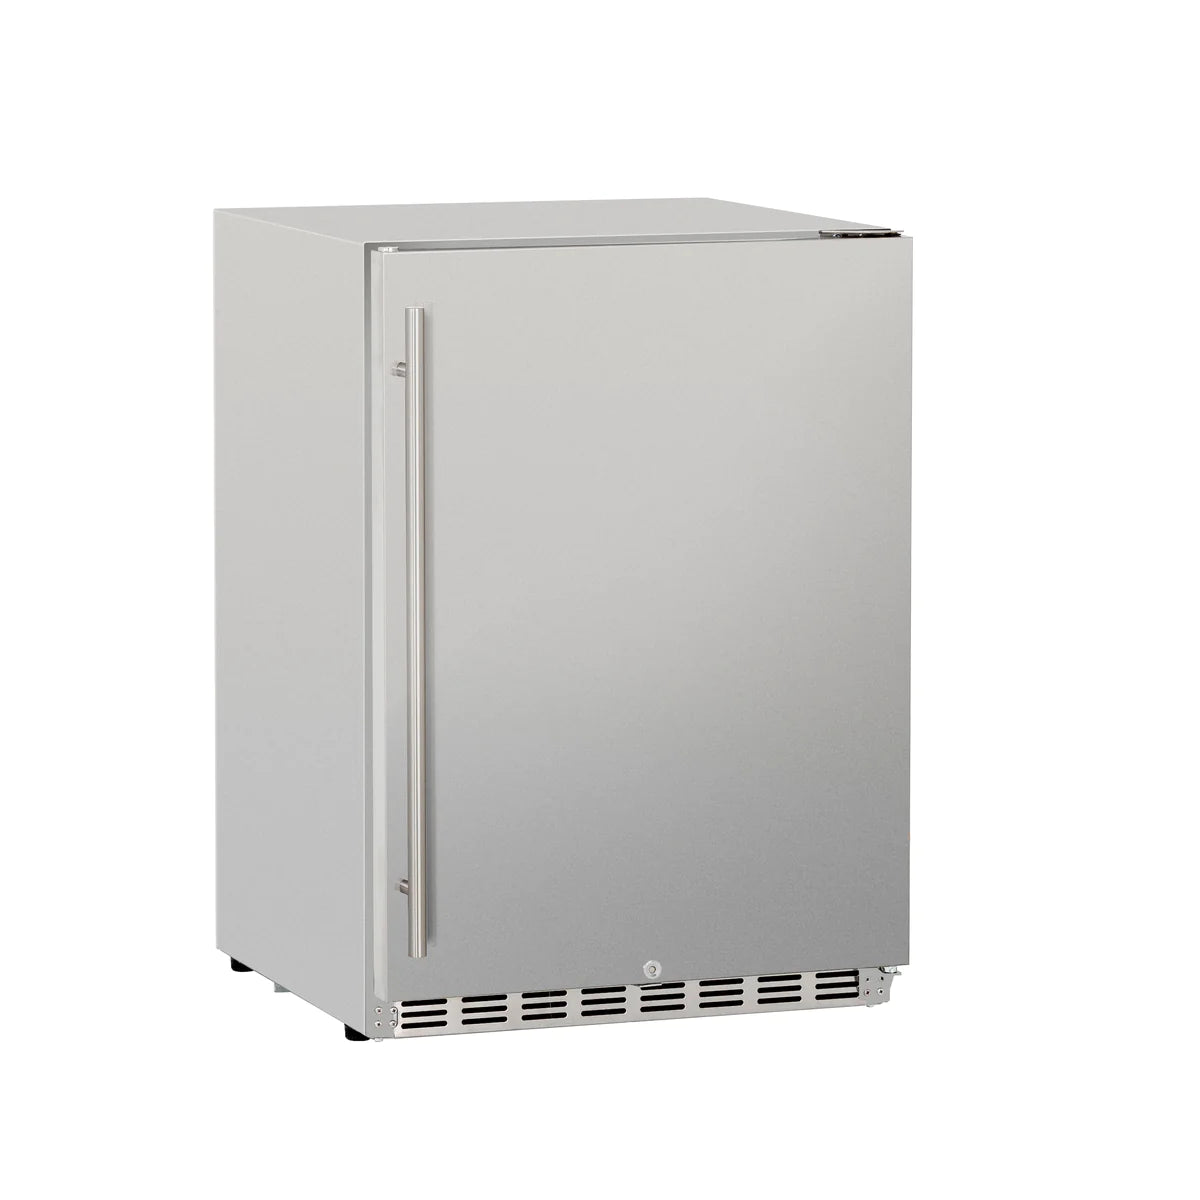 24" 5.3c Deluxe Outdoor Rated Refrigerator